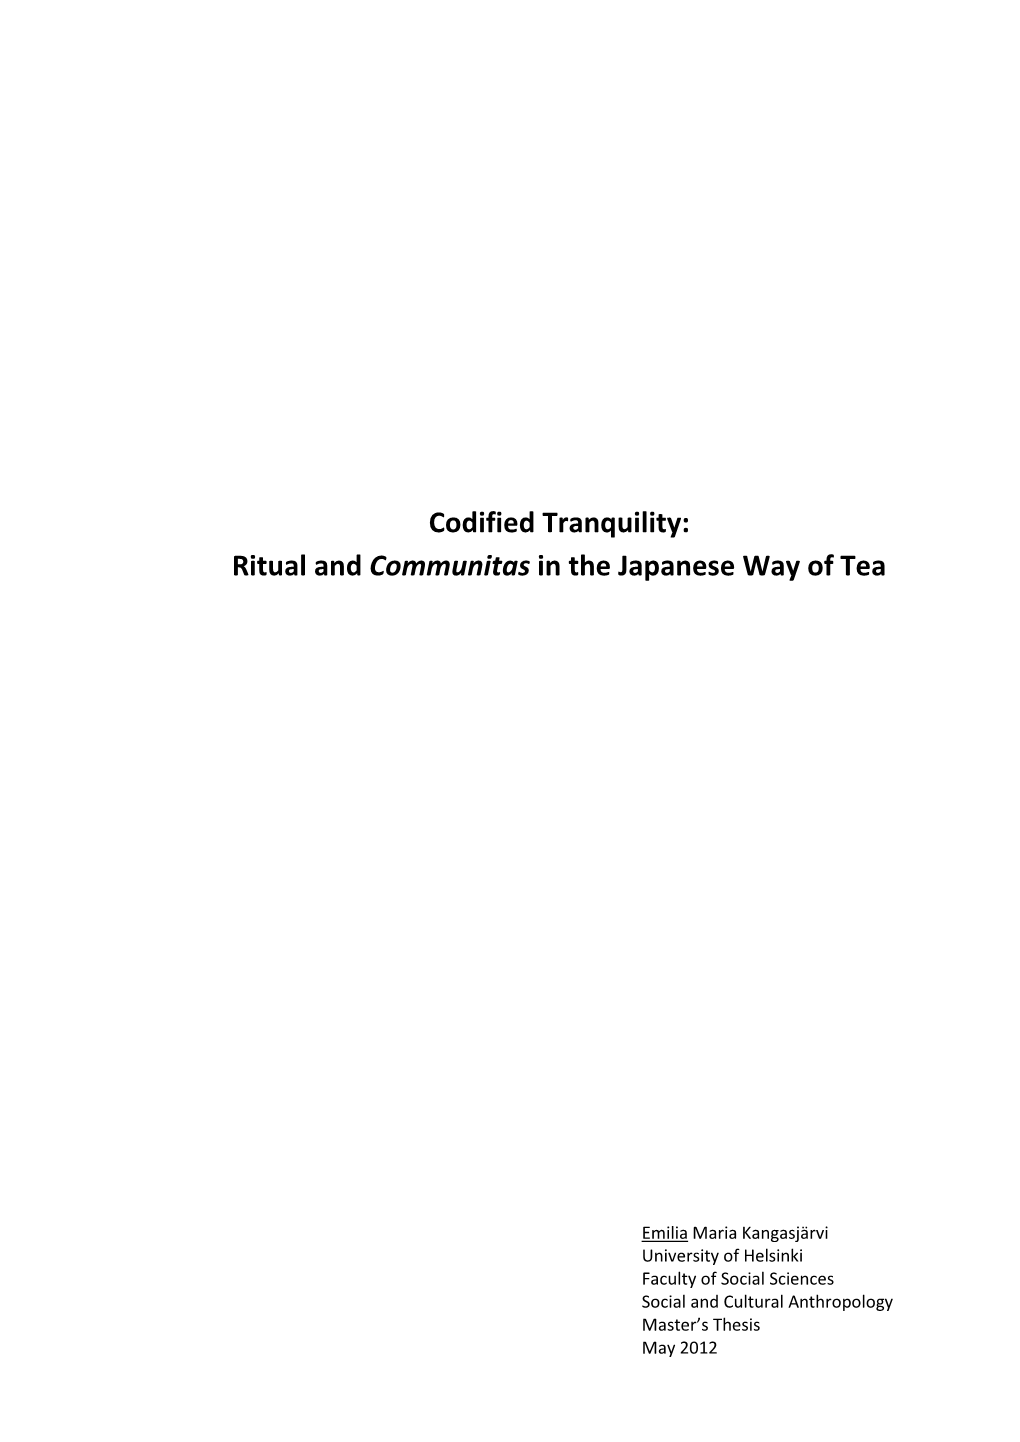 Ritual and Communitas in the Japanese Way of Tea